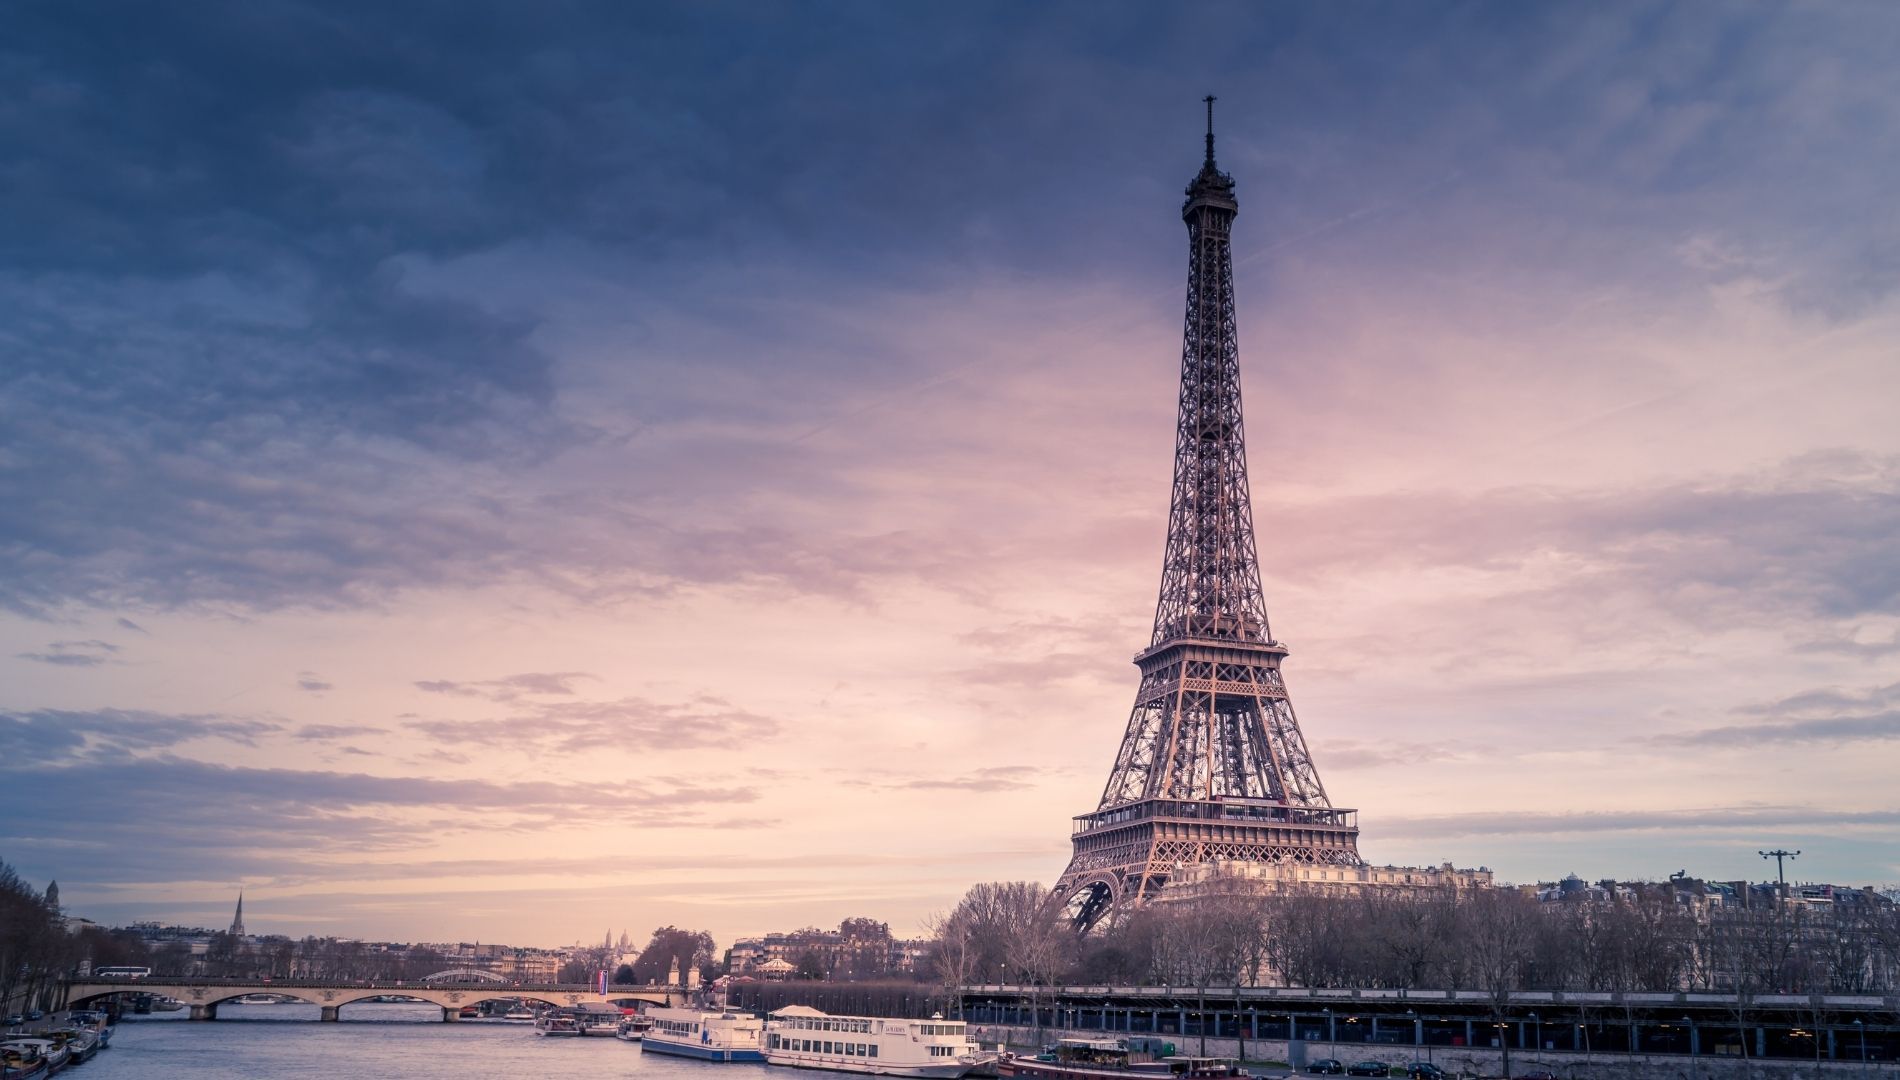 Most romantic places in the world: Paris